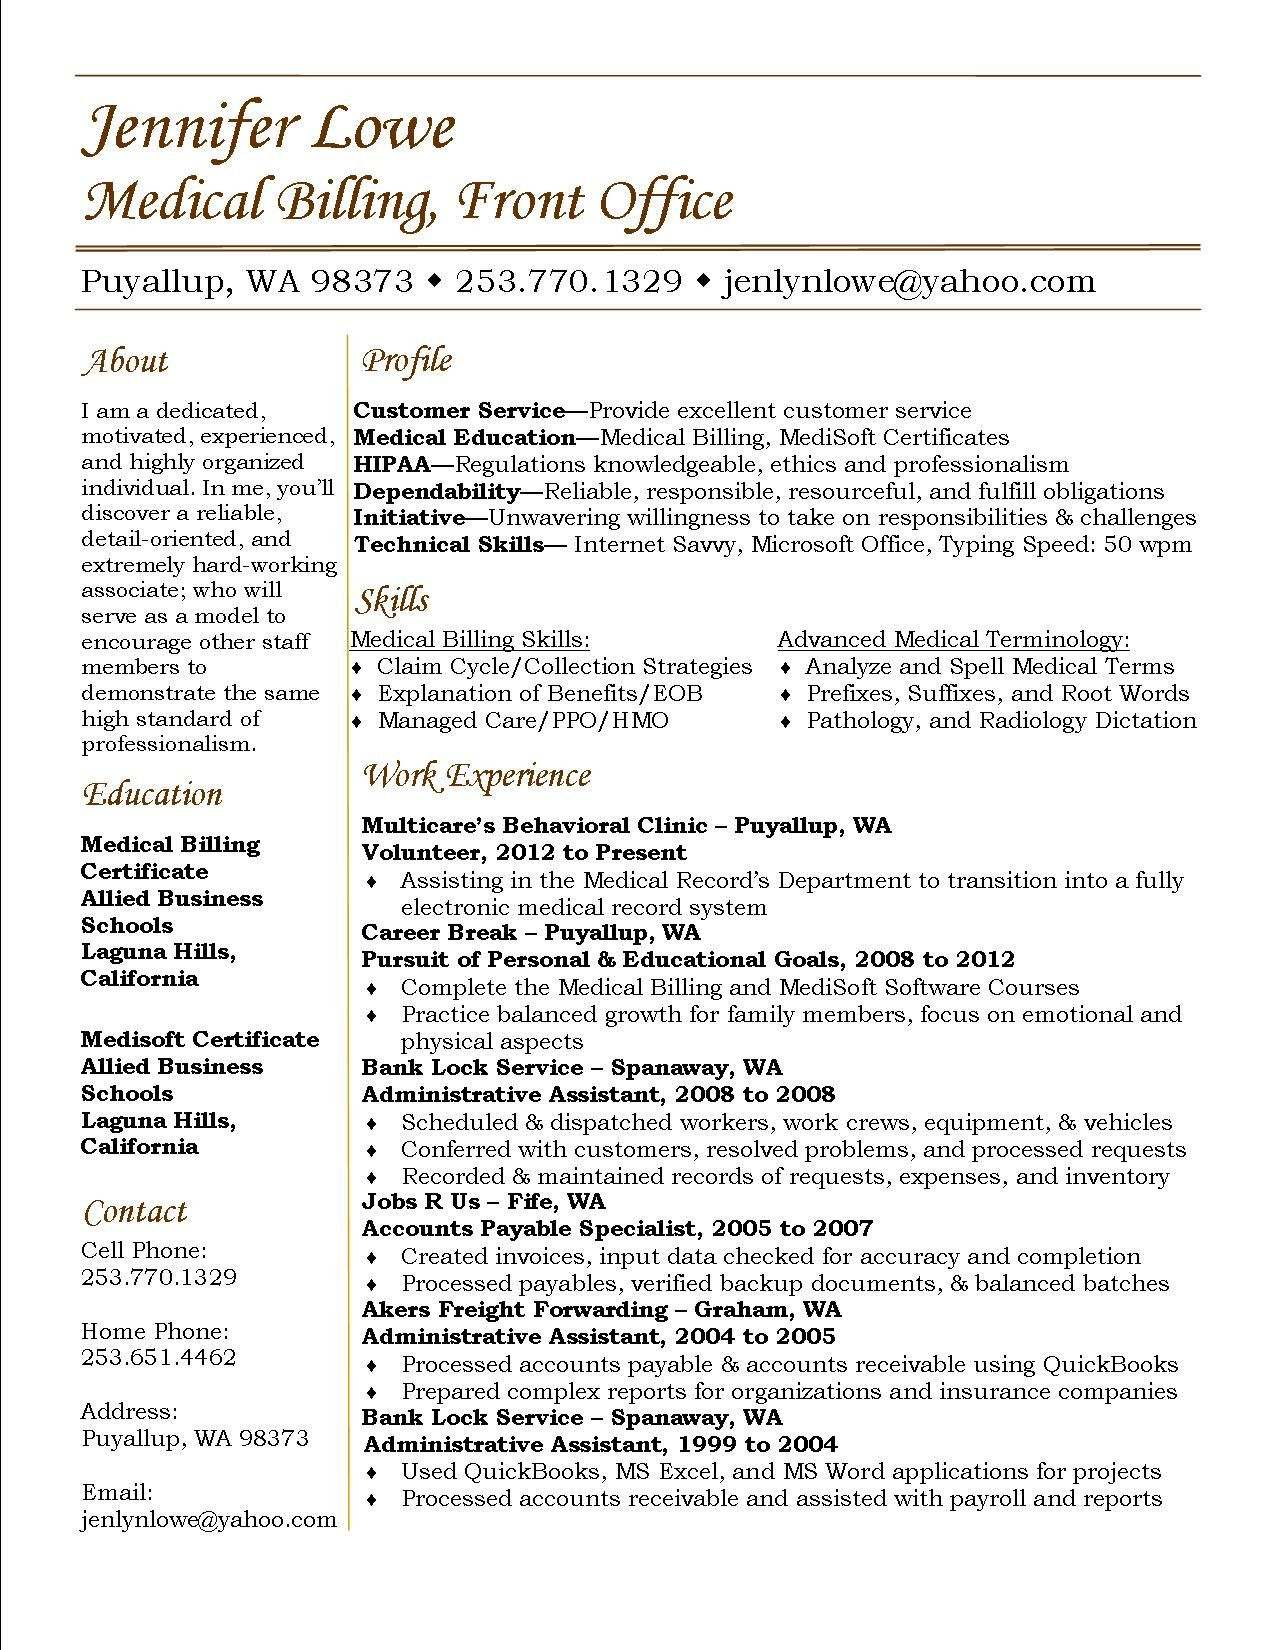 Free Medical Billing and Coding Resume Templates Jennifer Lowe Resume – Medical Billing #resume #career Medical …